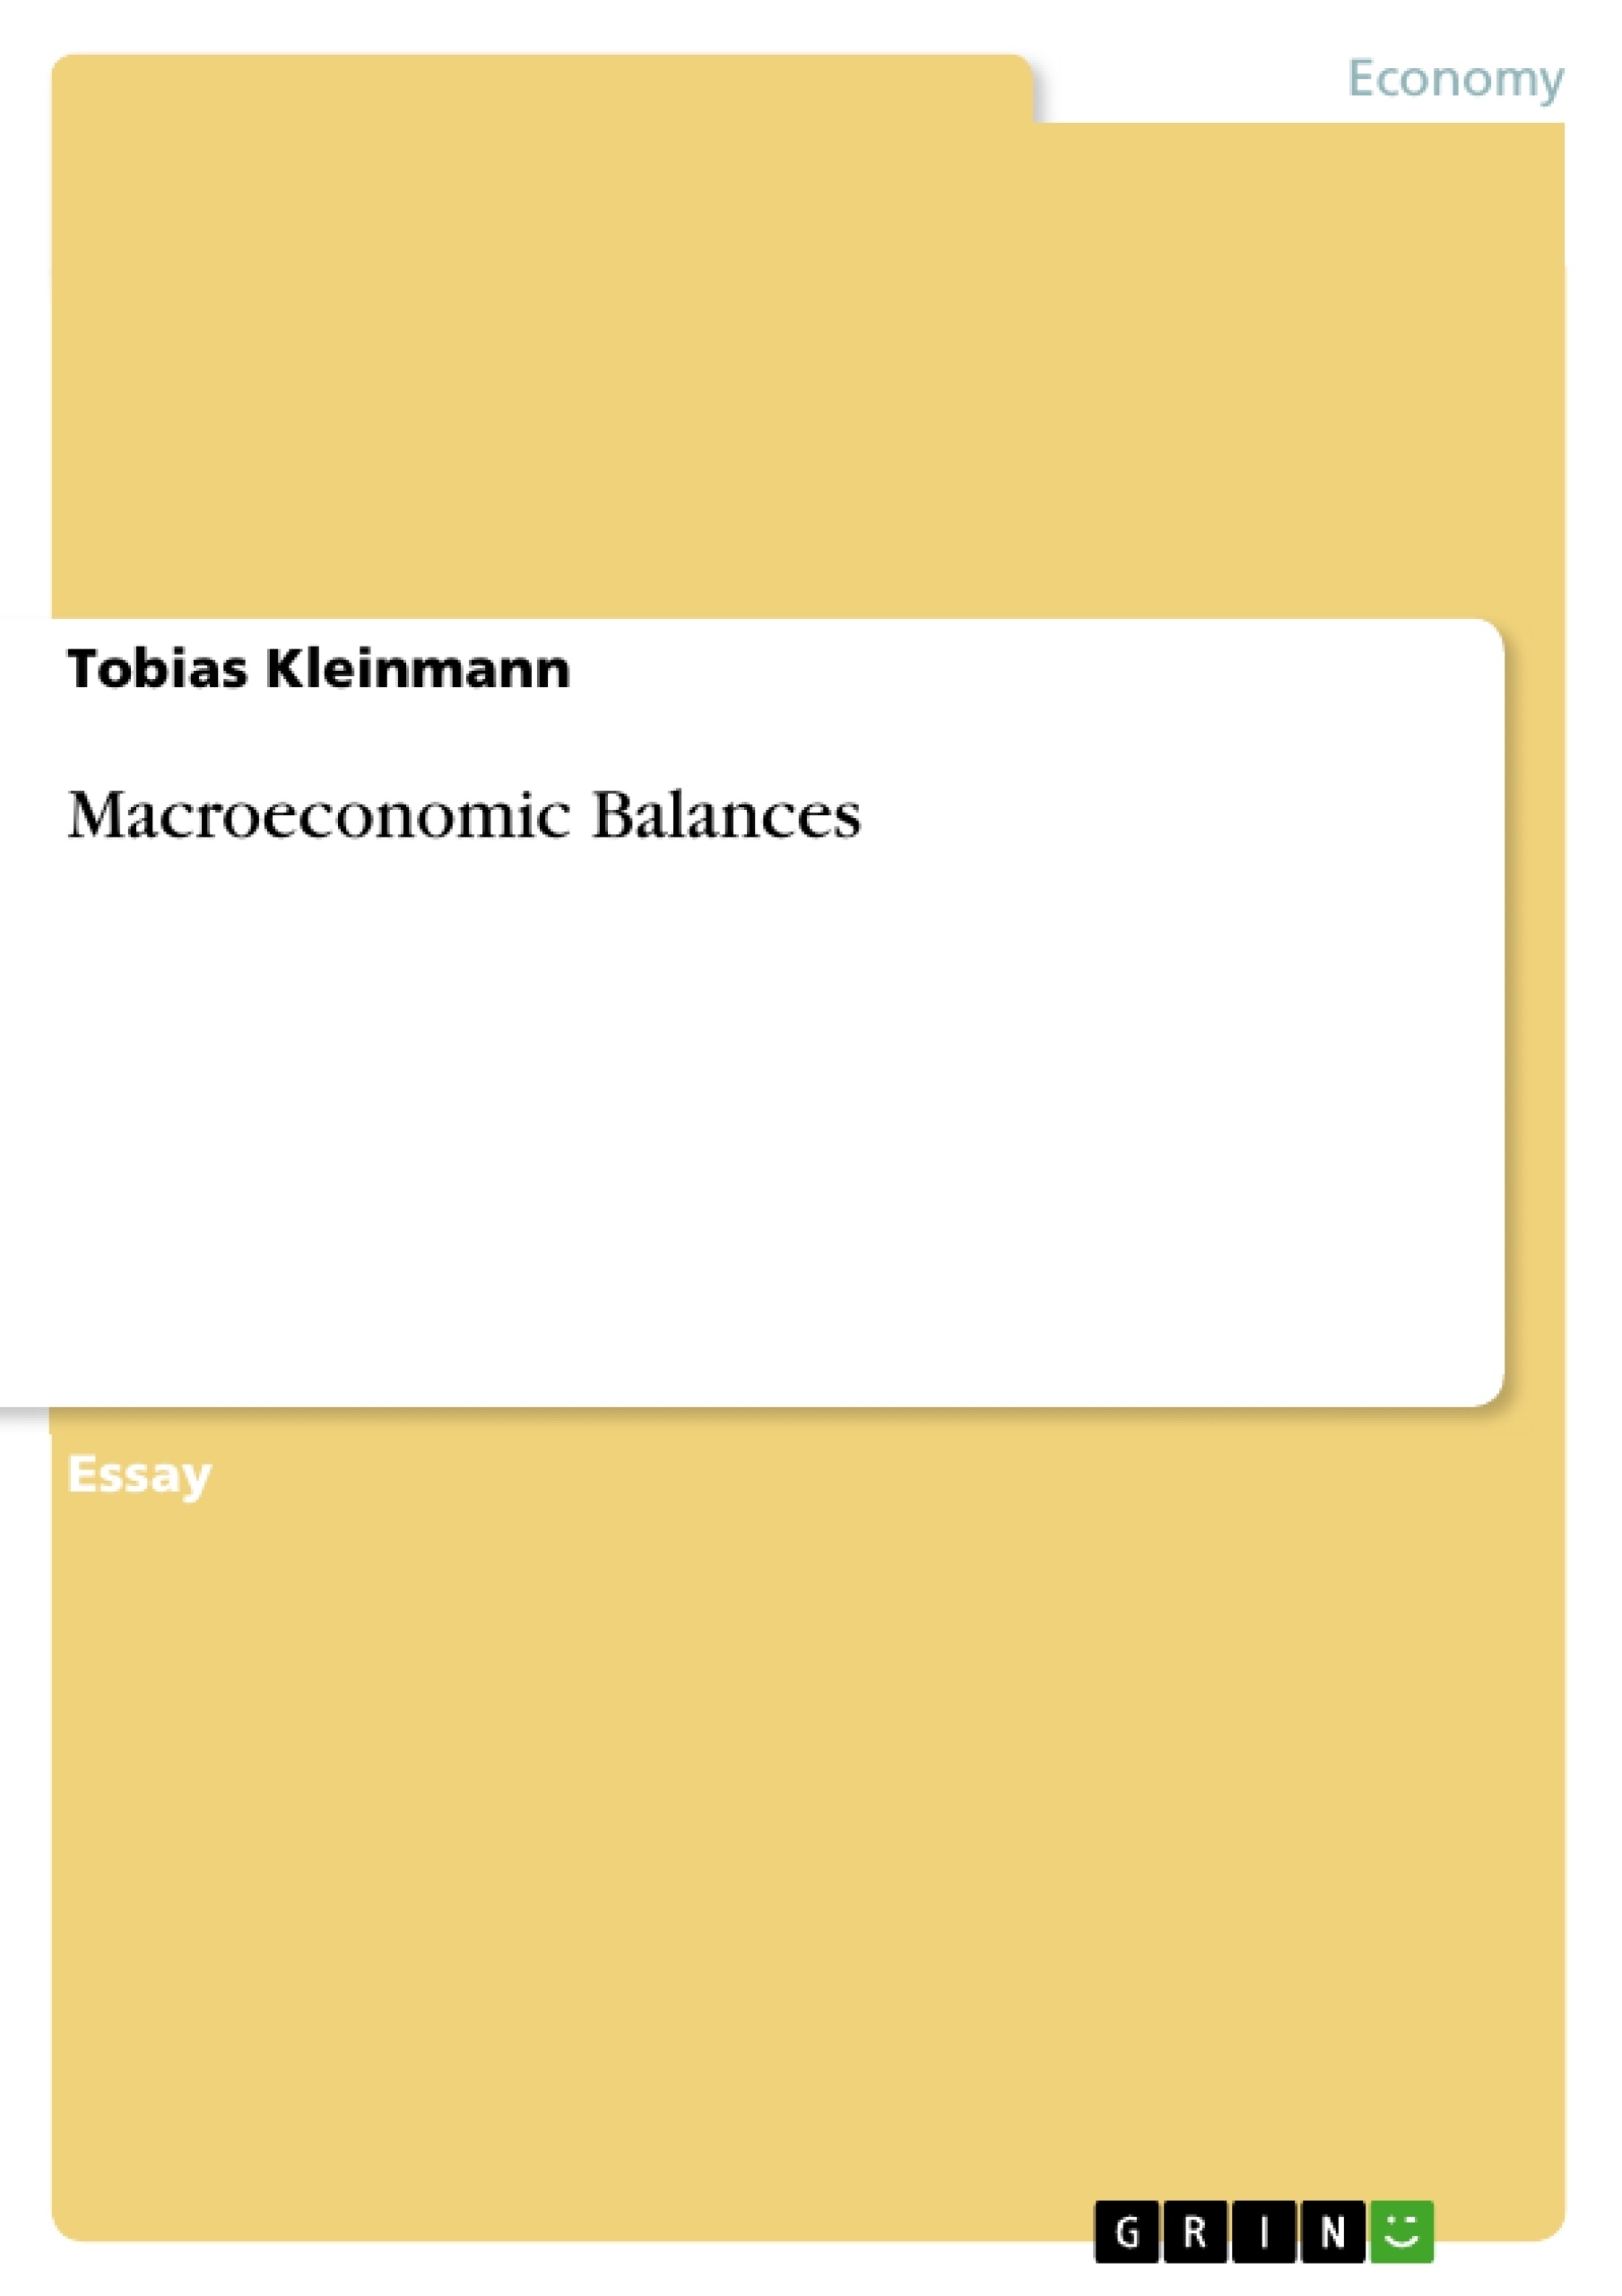 Title: Macroeconomic Balances